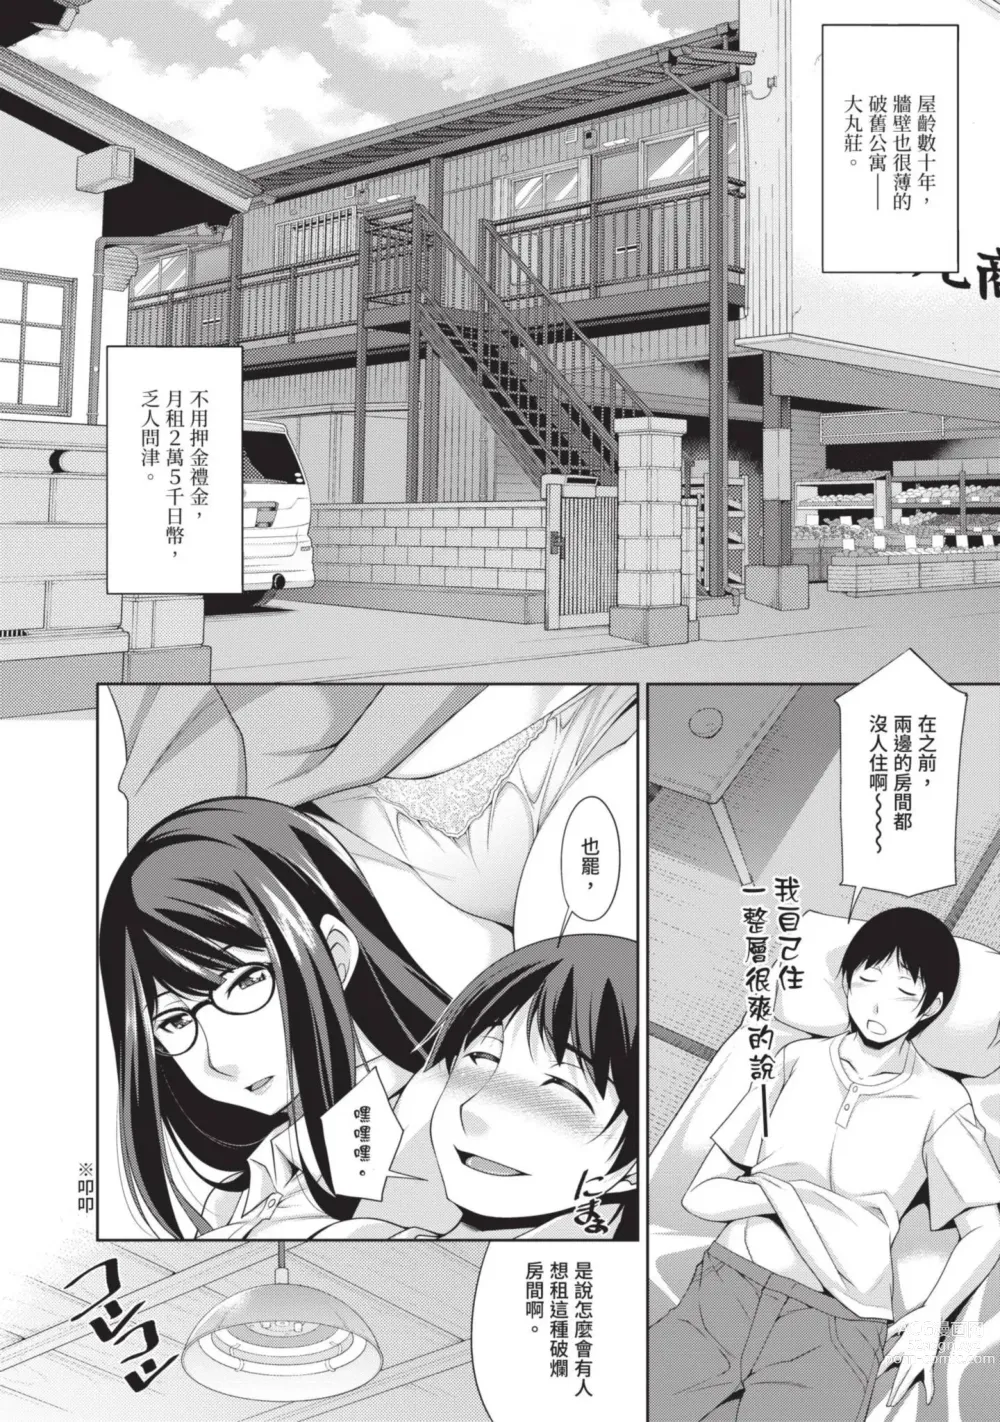 Page 10 of manga 眼鏡美女總是冷淡對應我